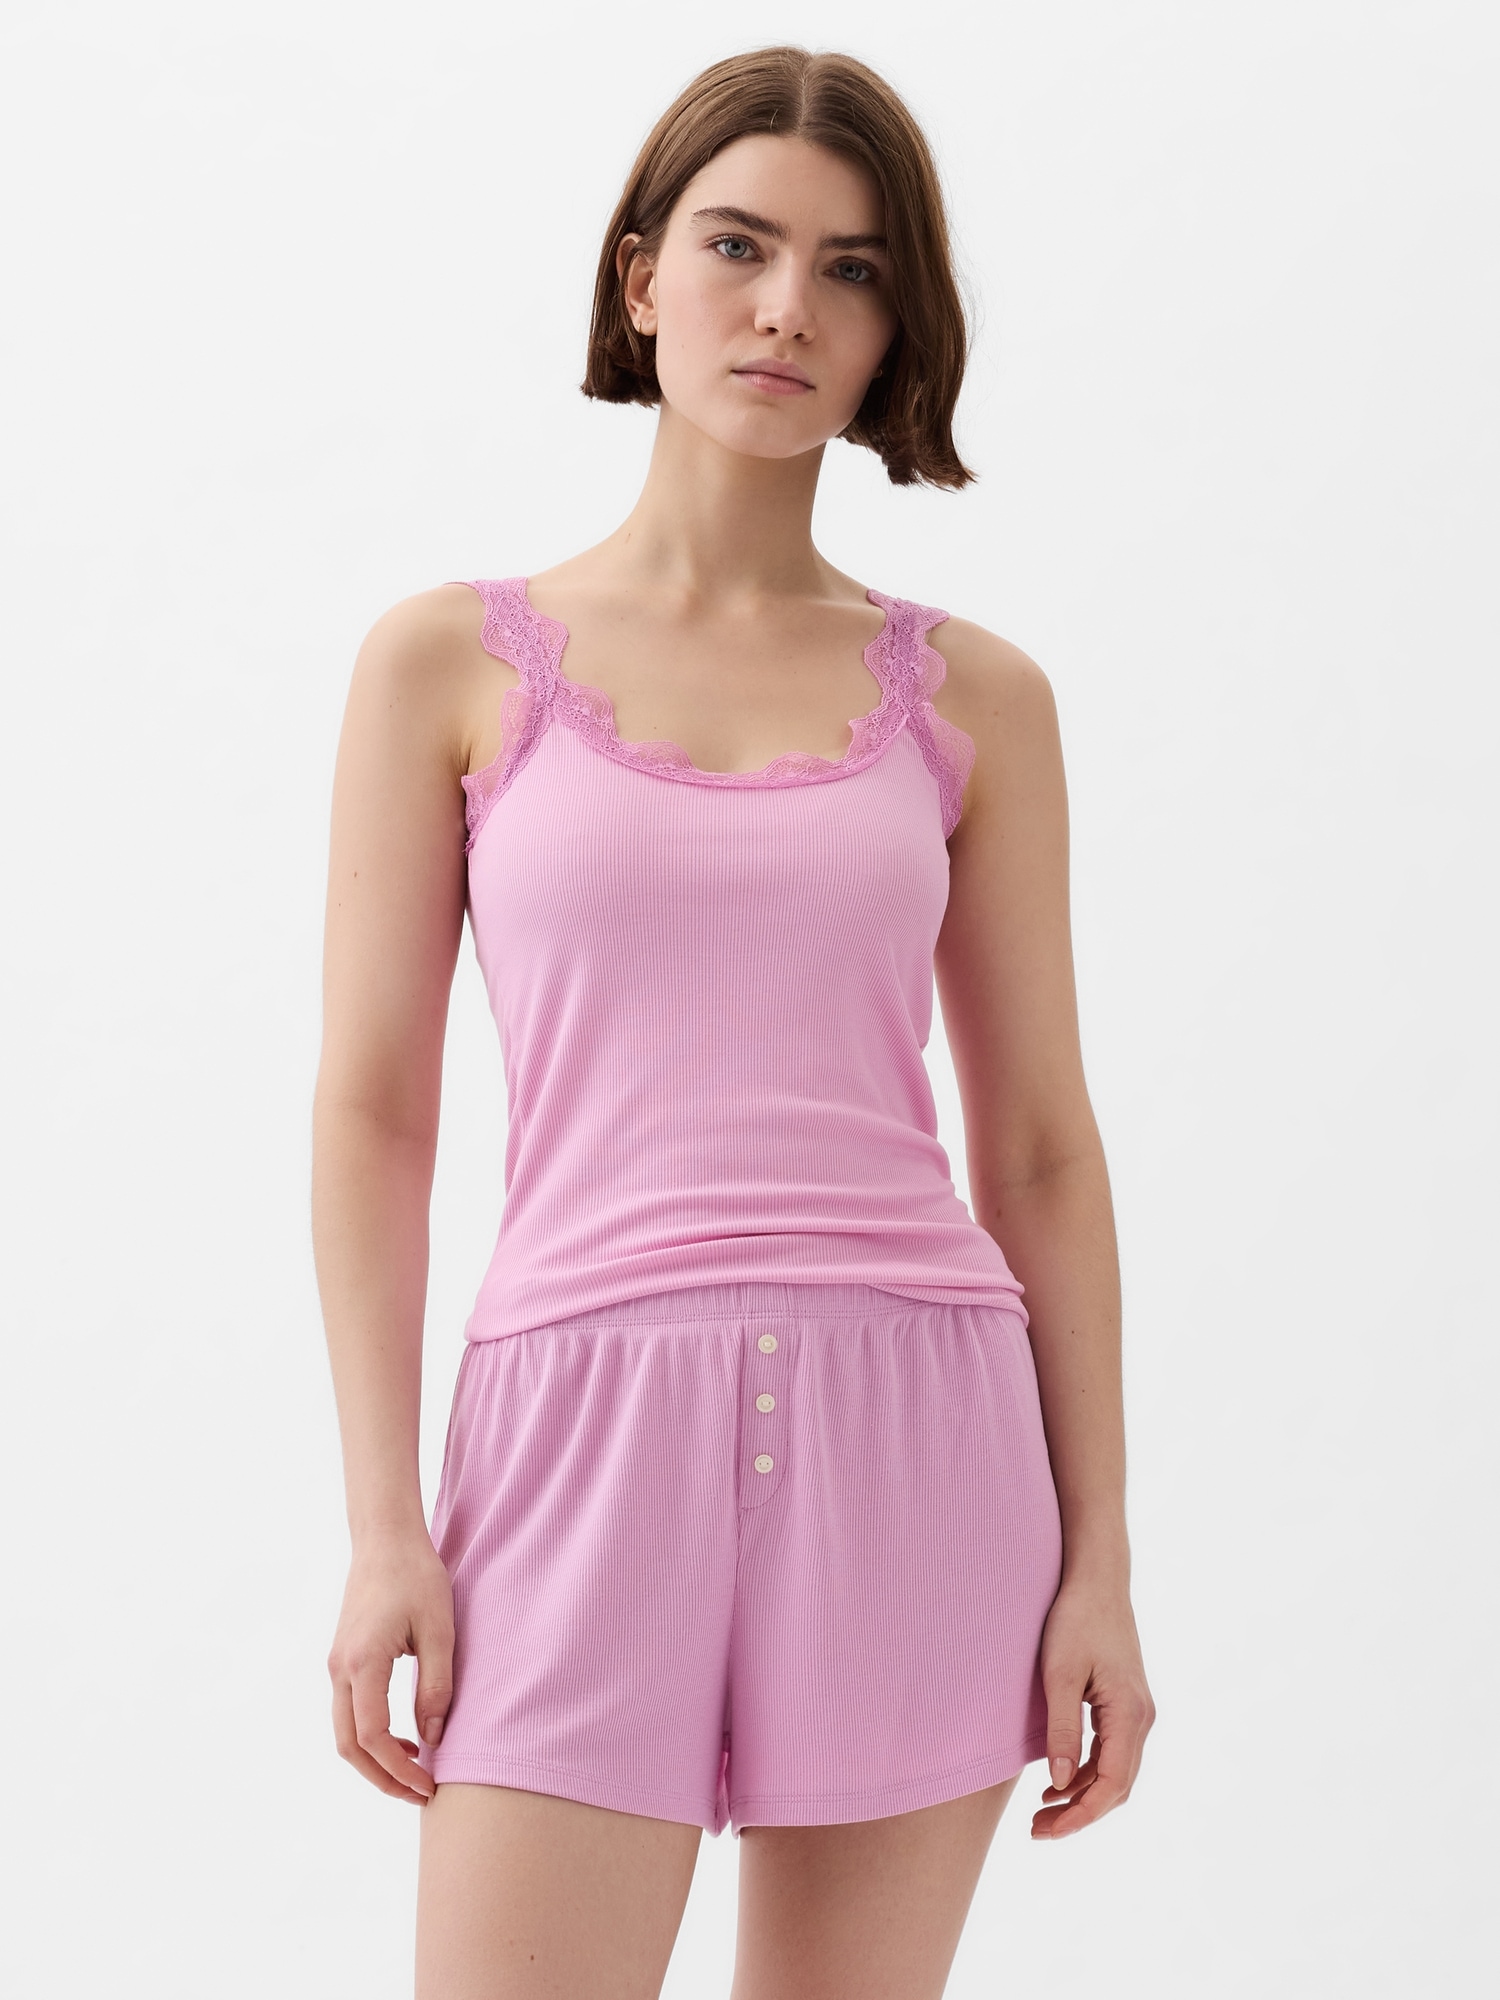 Pajama R Us Women's 12 Pack Ribbed Tank Tops Size S M L XL XXL